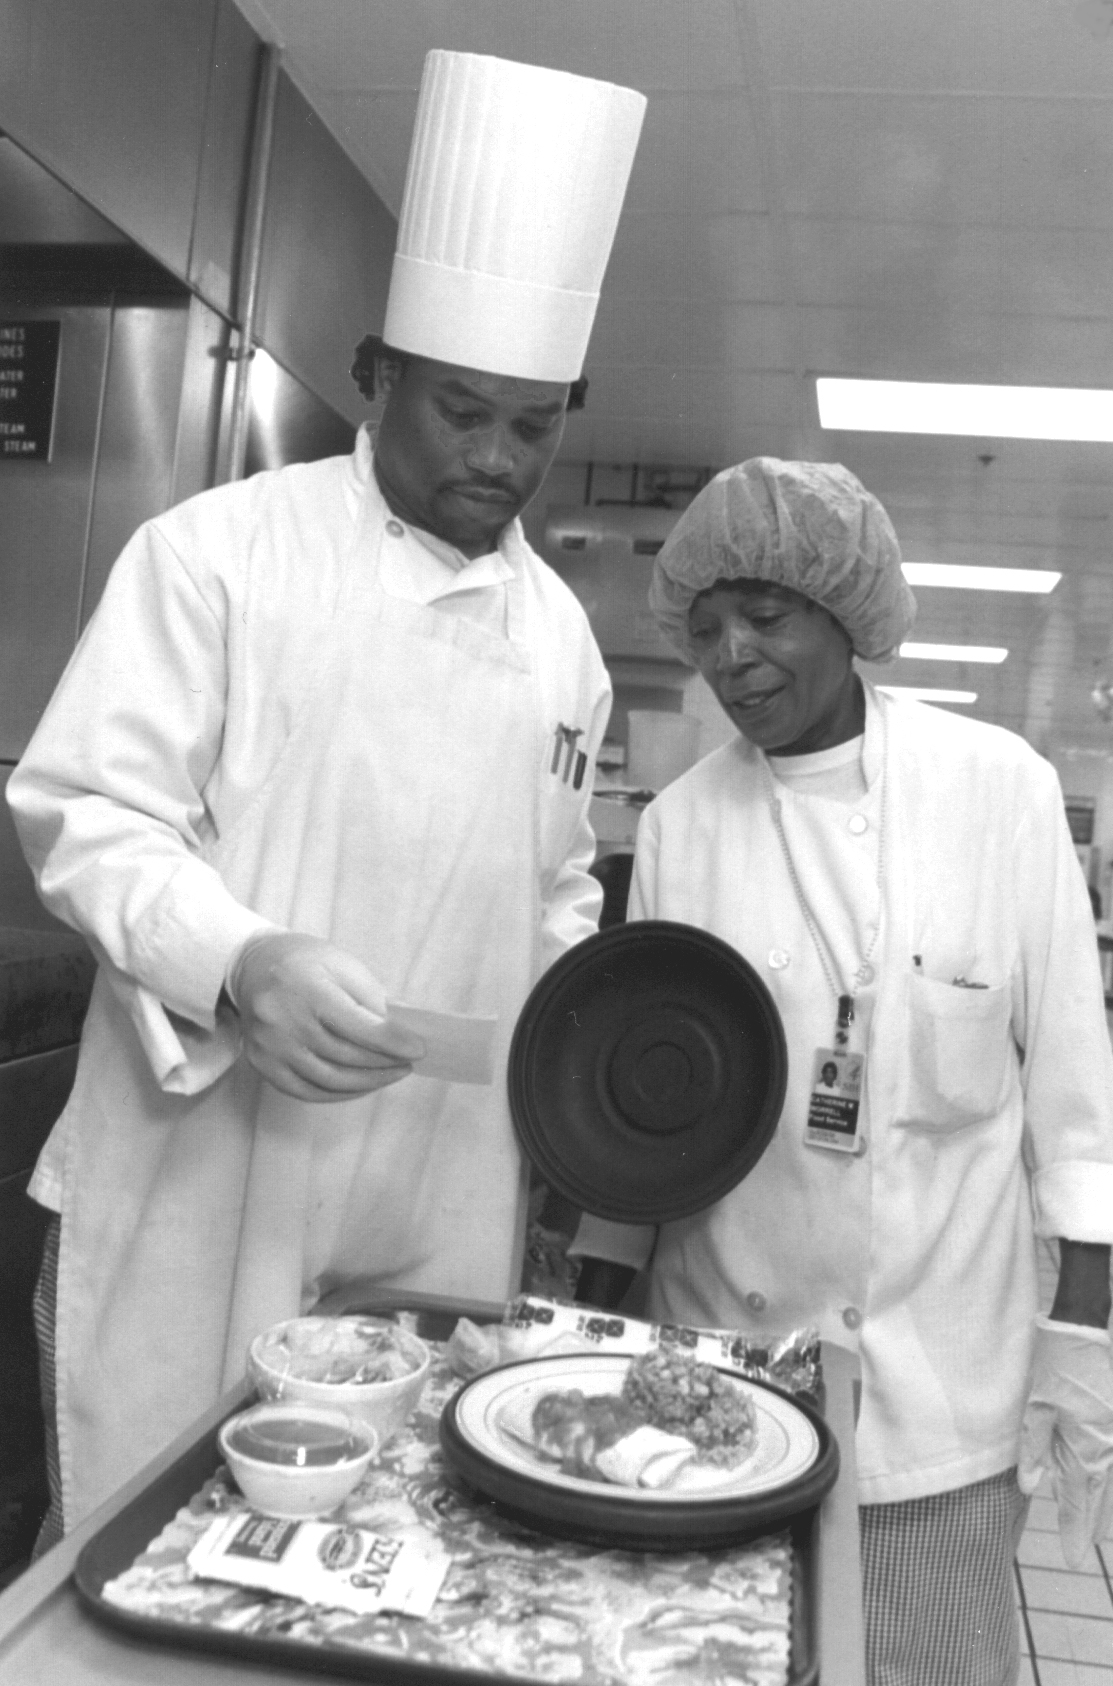 dietary staff preparing food